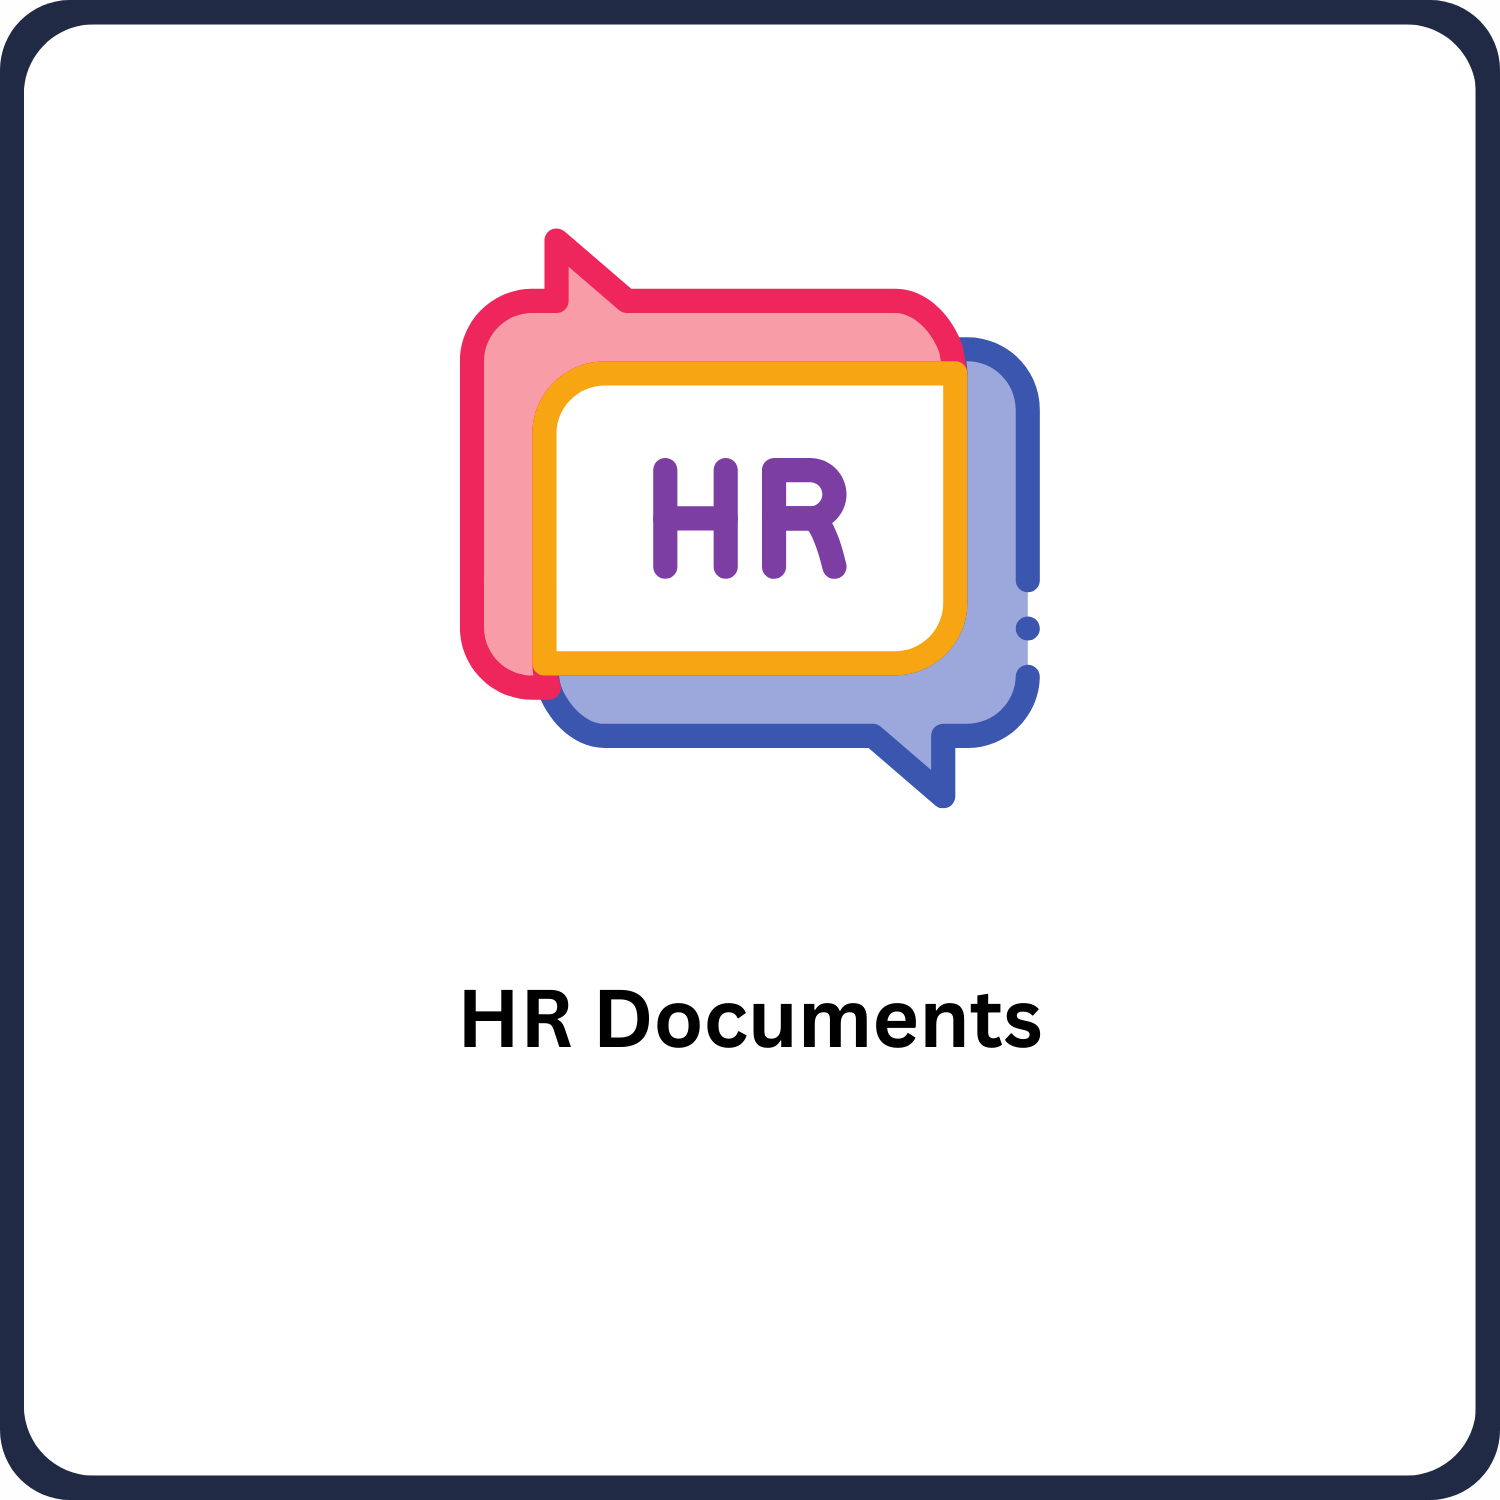 HR Documents